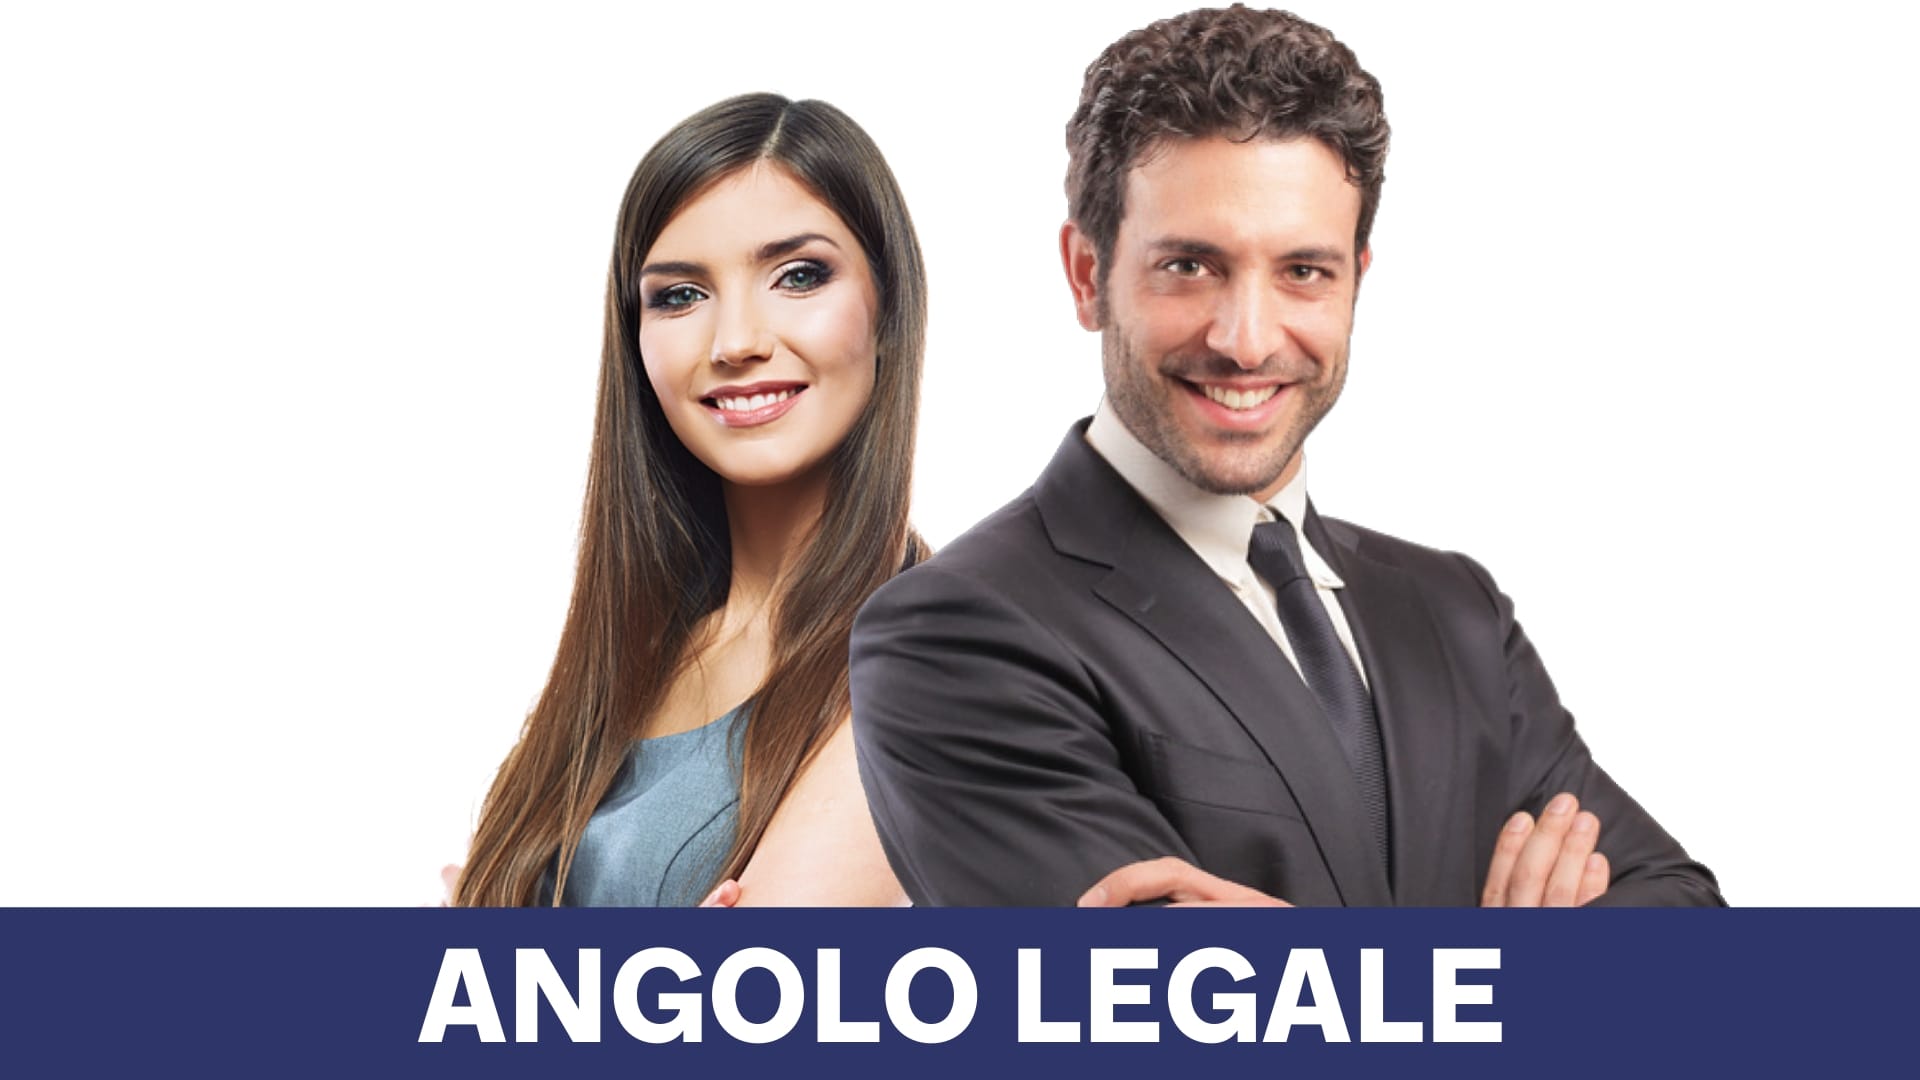 Angolo Legale FIAP v3